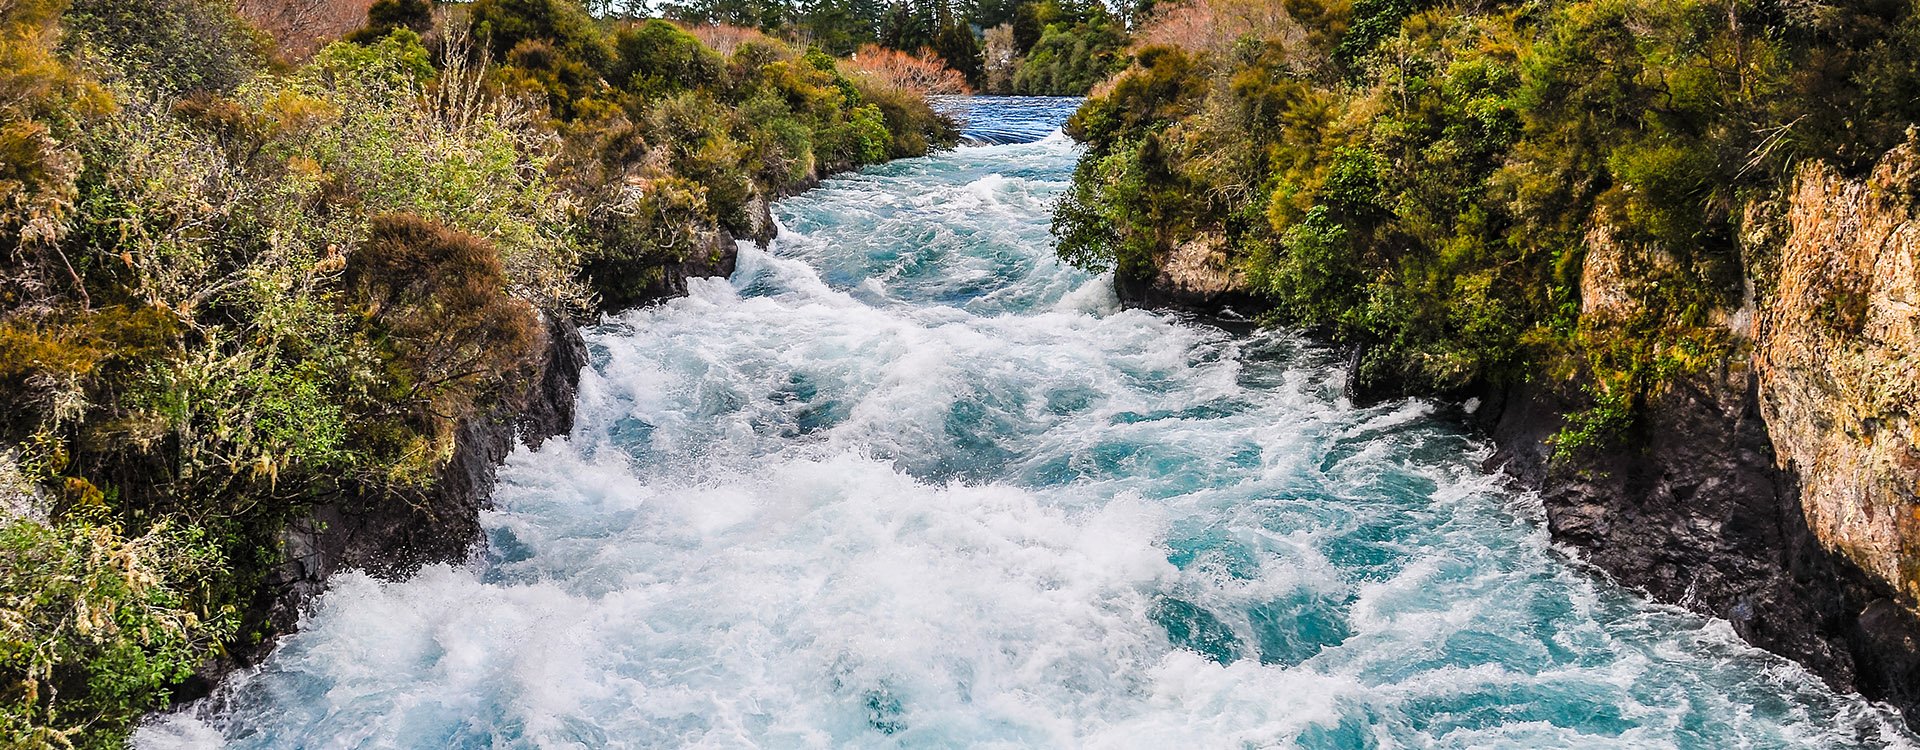 The rushing wild stream of Huka Falls near Lake Taupo, New Zealand